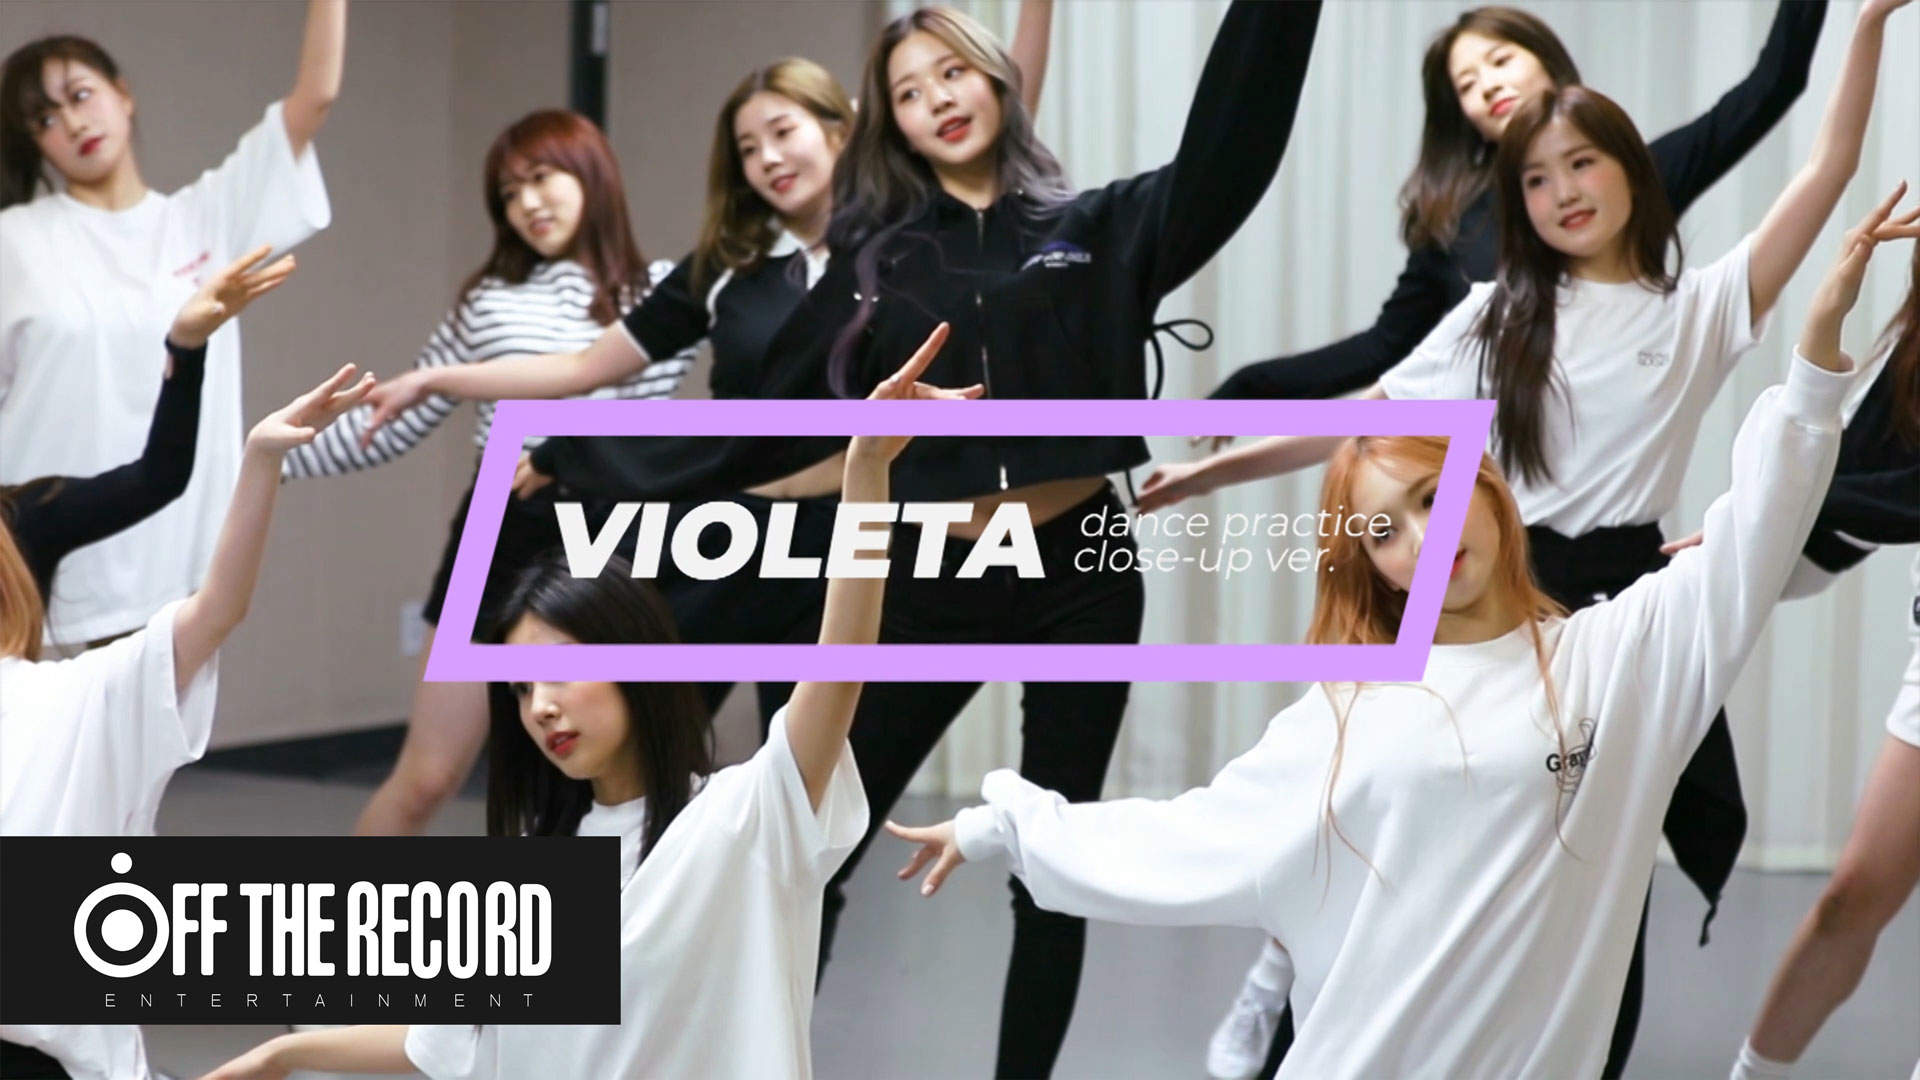 [SPECIAL VIDEO] IZ*ONE (아이즈원) - 비올레타 (Violeta) Dance Practice Close up Ver.